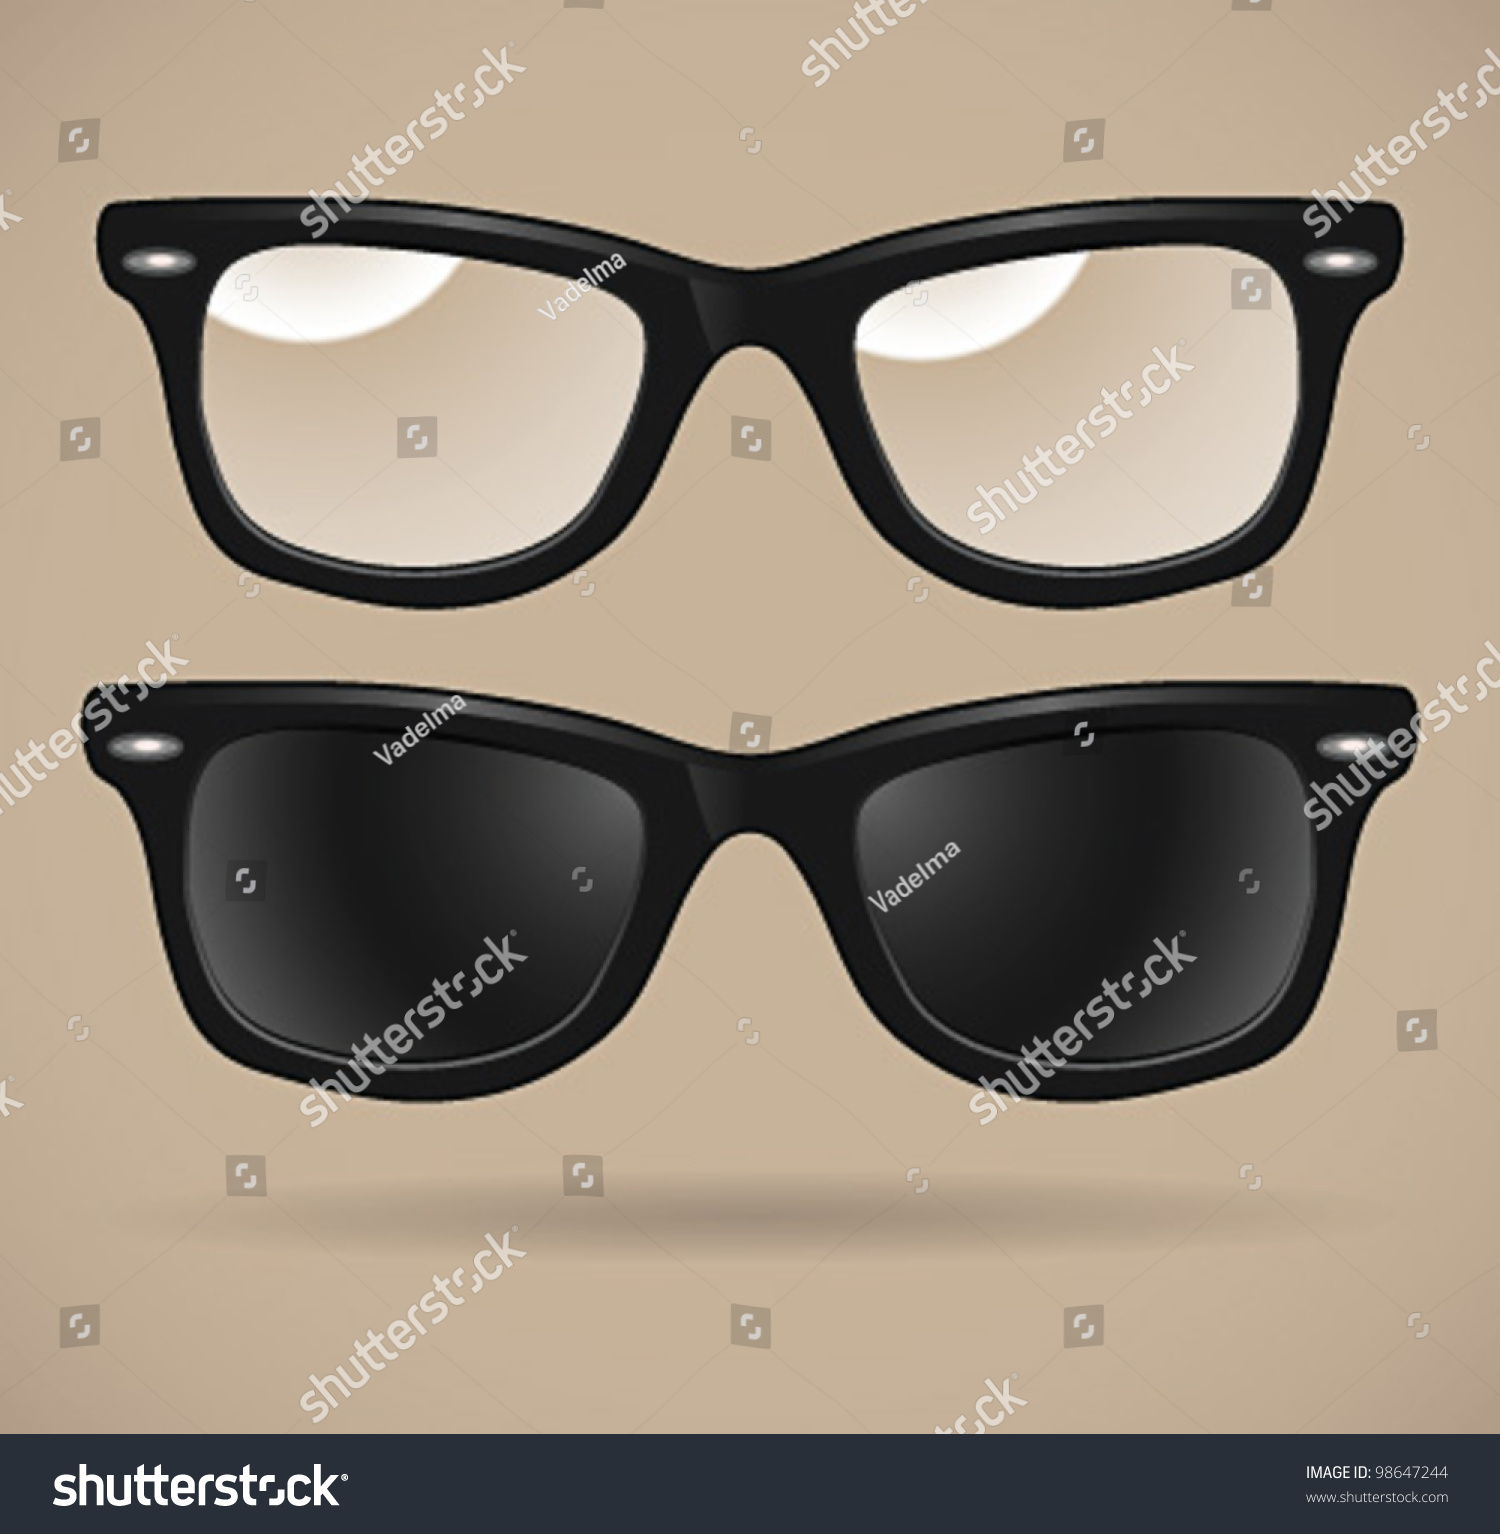 wayfarer shape glasses